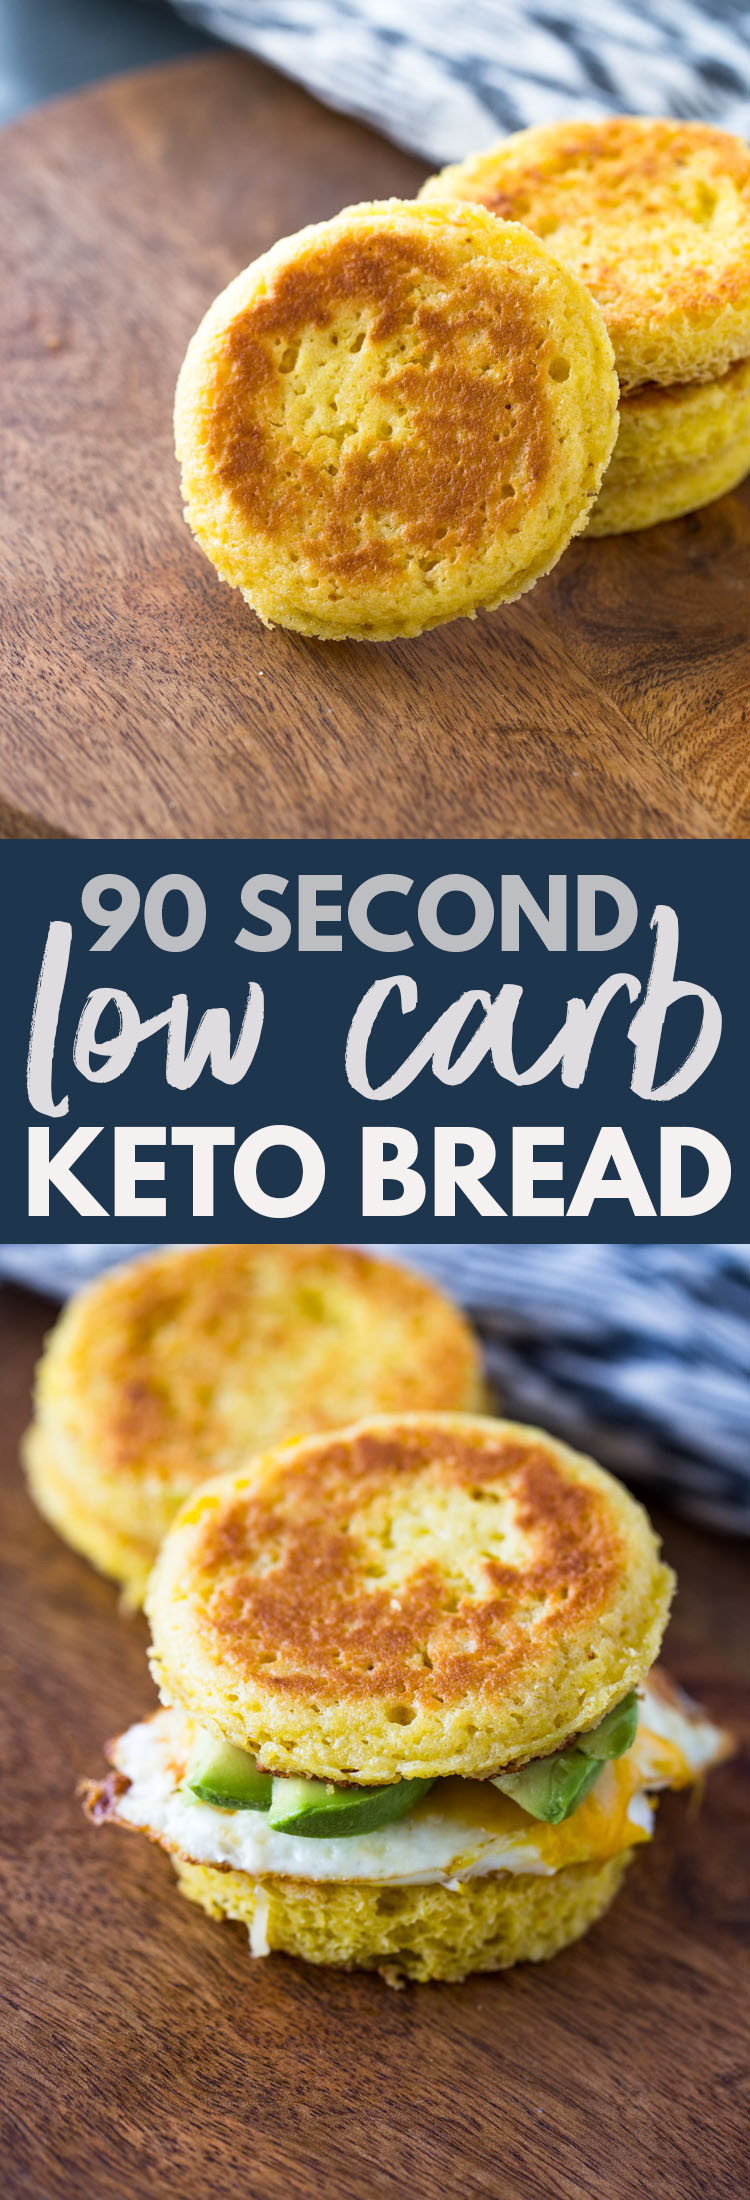 Keto 90 Second Bread
 90 Second Microwavable Low Carb Keto Bread